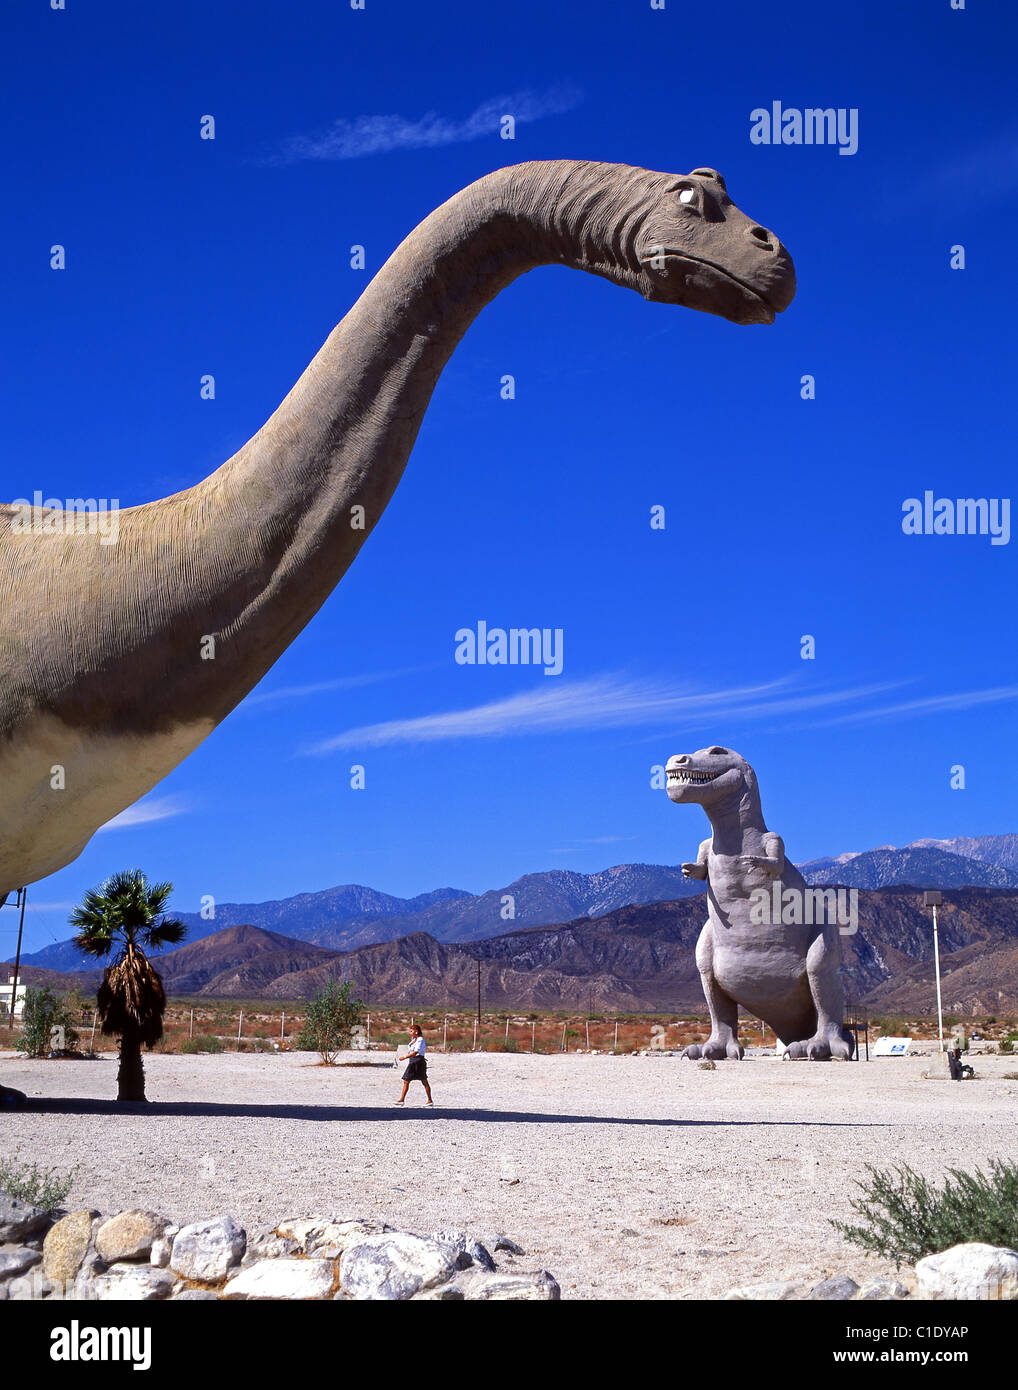 Cabazon Dinosaurs, Seminole Drive, Cabazon, near Palm Springs, California, United States of America Stock Photo